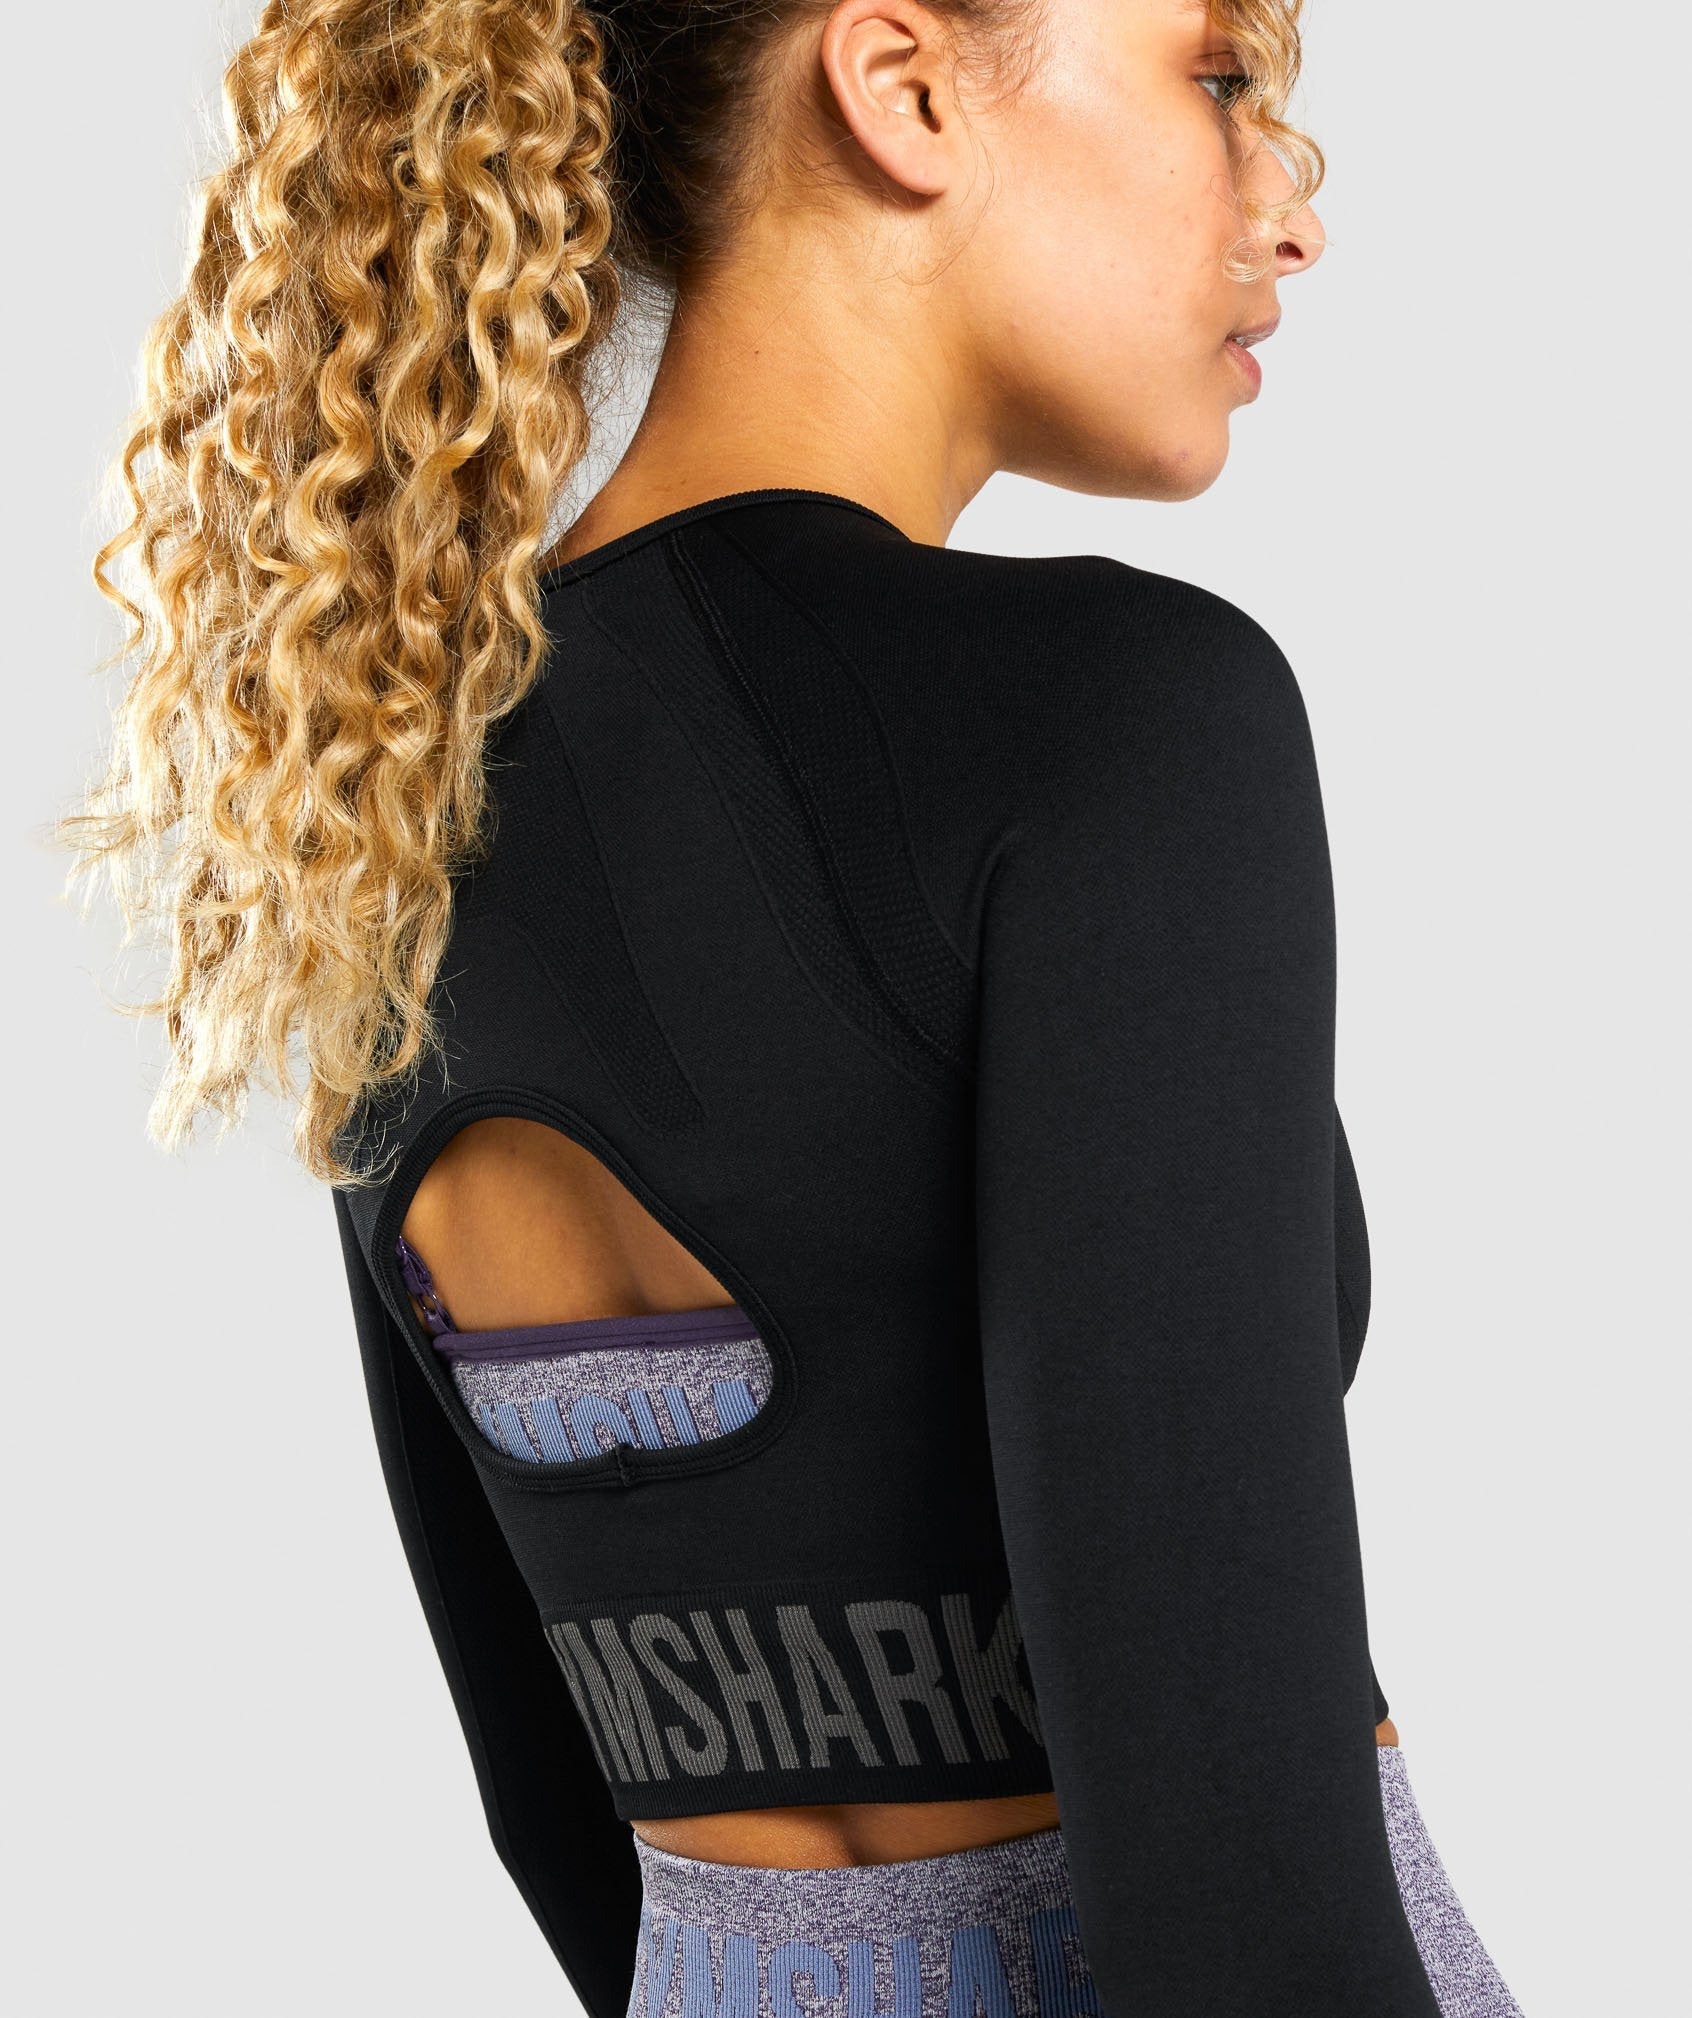 Flex Sports Long Sleeve Crop Top in Black/Charcoal